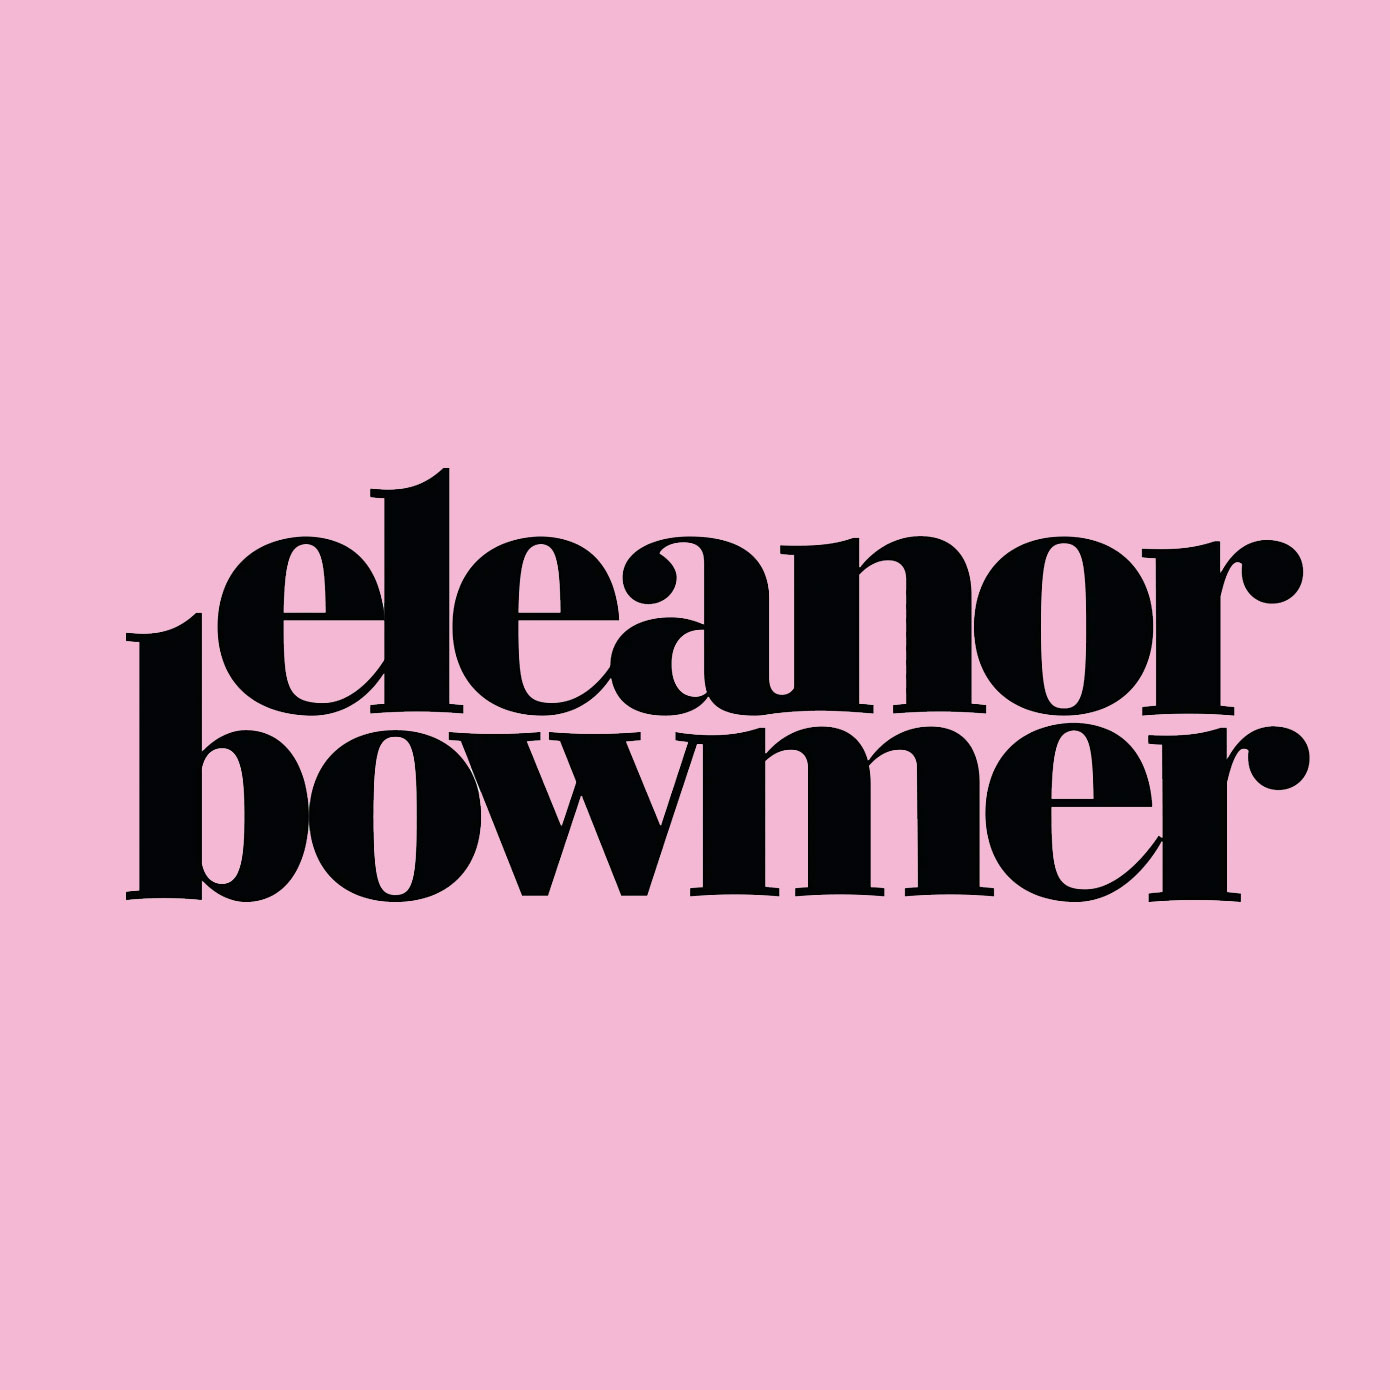 Eleanor Bowmer